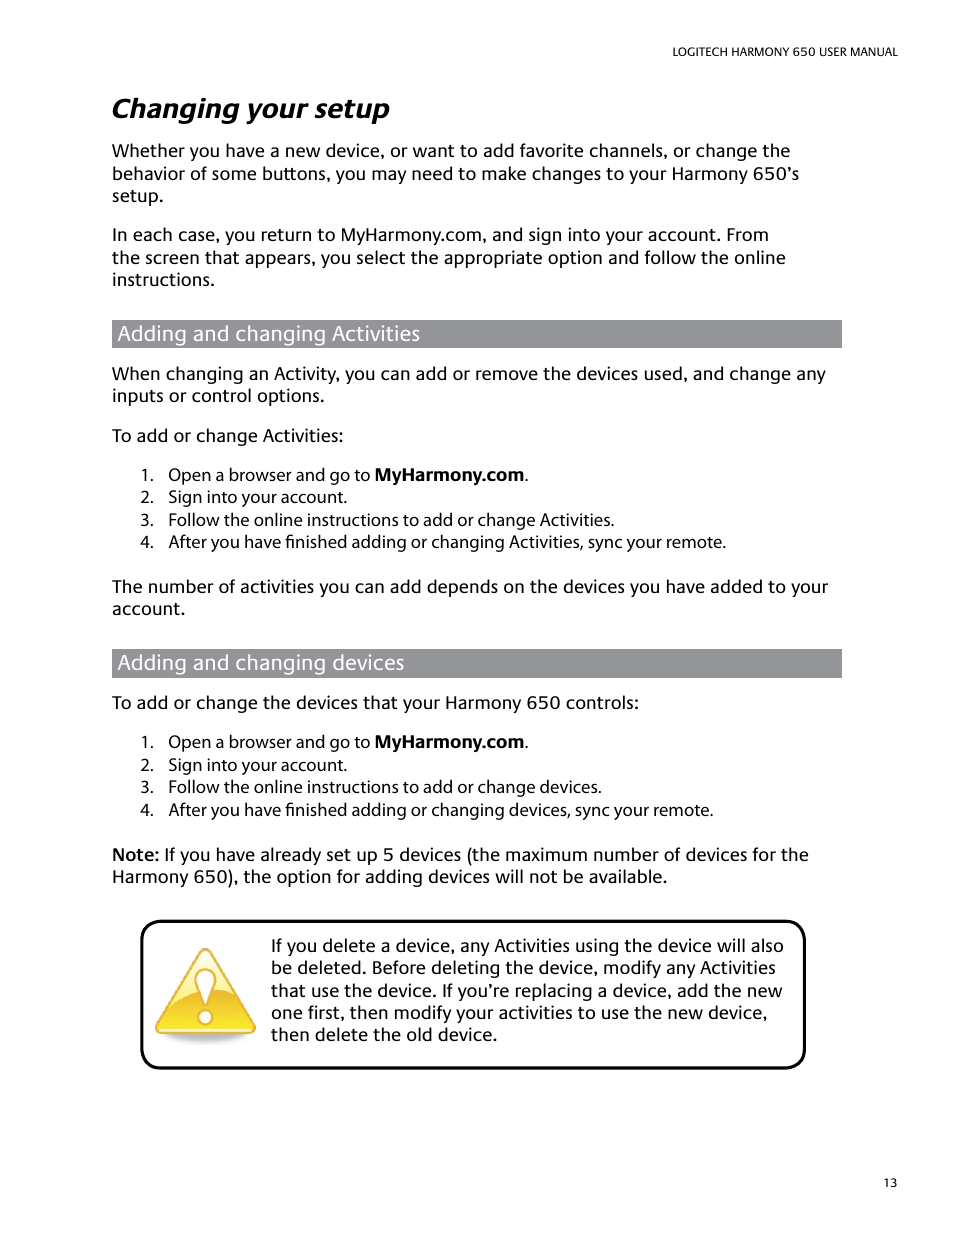 Changing your setup | Logitech Harmony 650 User Manual | Page 17 / 26